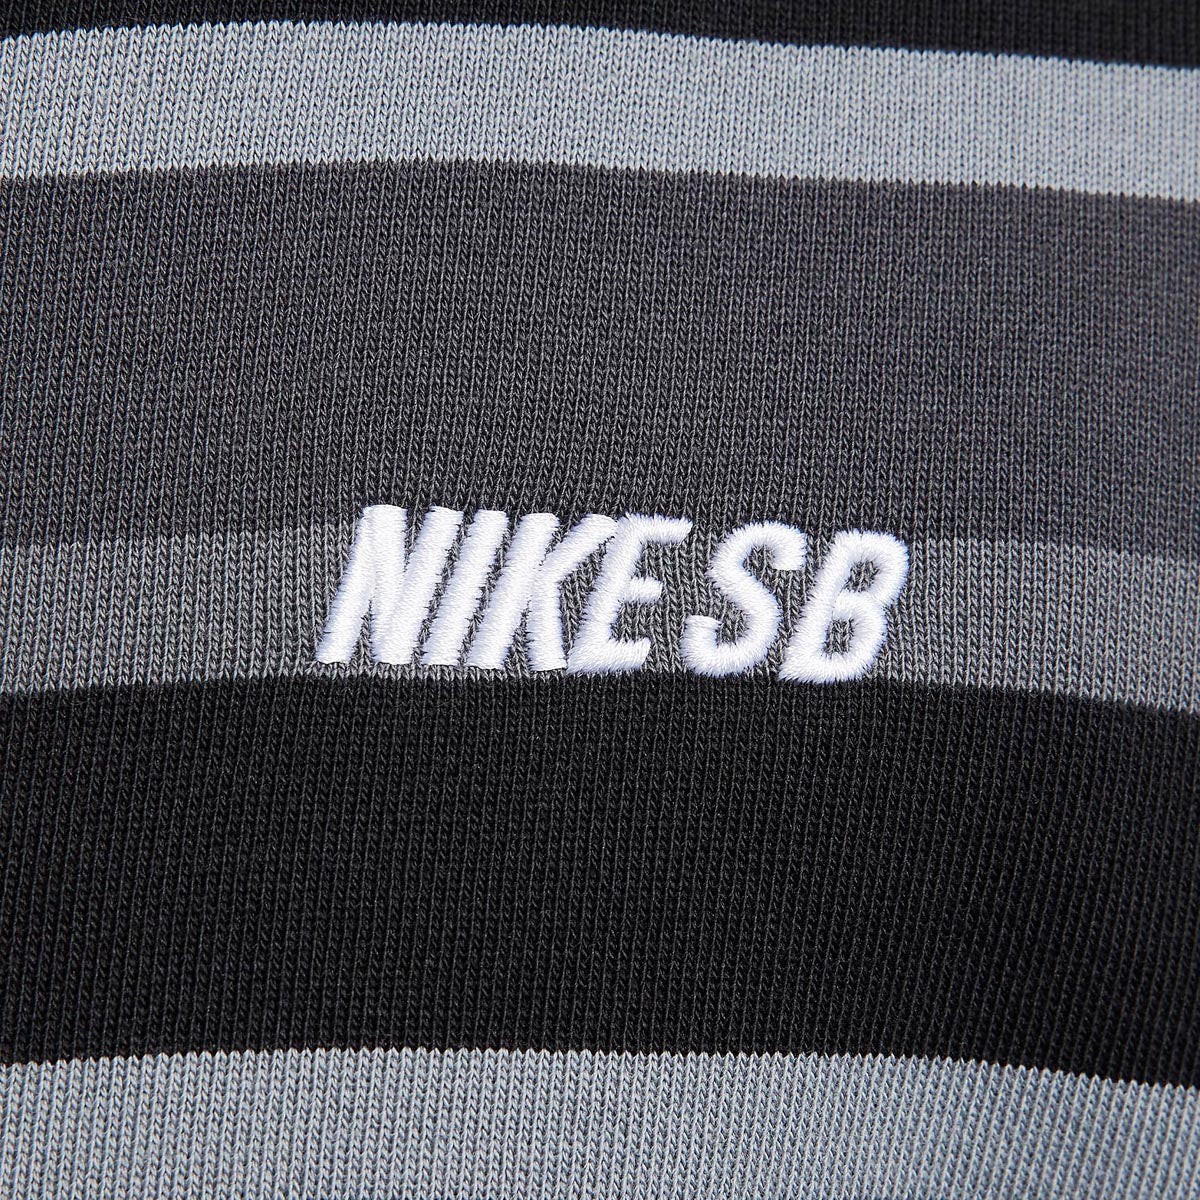 Nike SB Striped Zip Up Hoodie - Cool Grey/Anthracite/White image 5